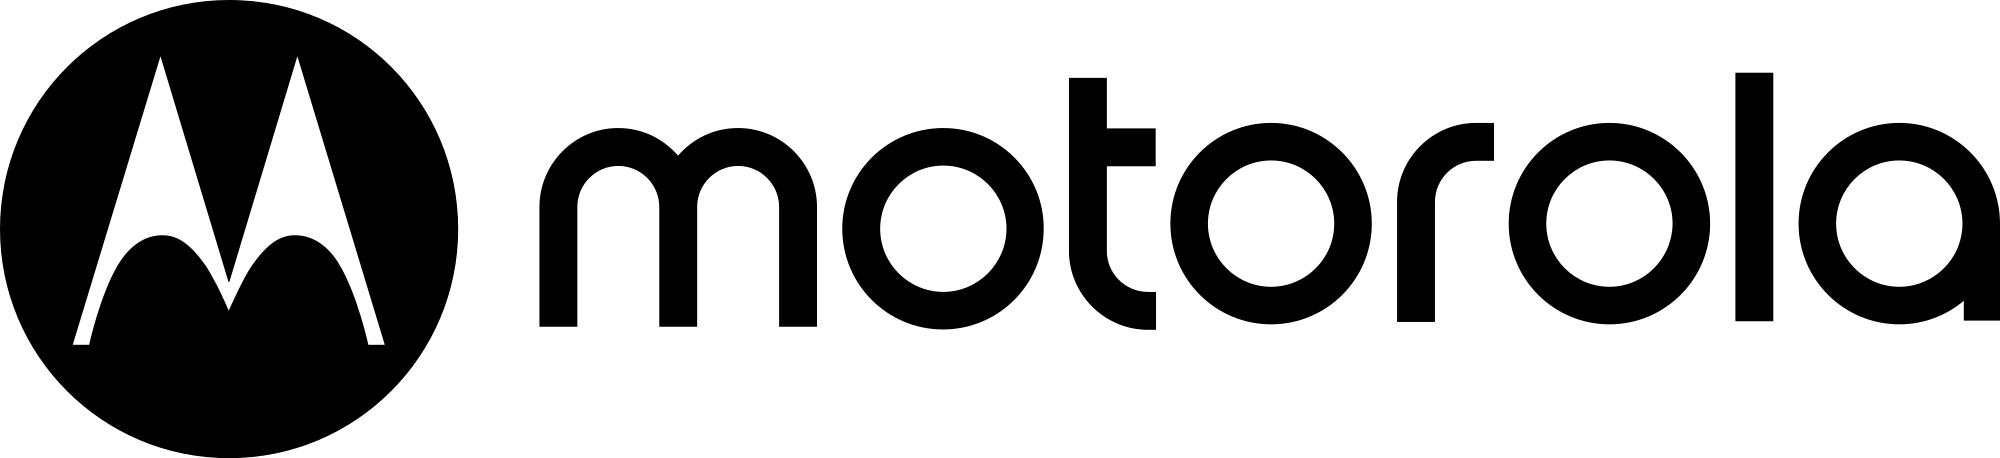 New Motorola Logo - File:Motorola new logo.svg - Wikimedia Commons